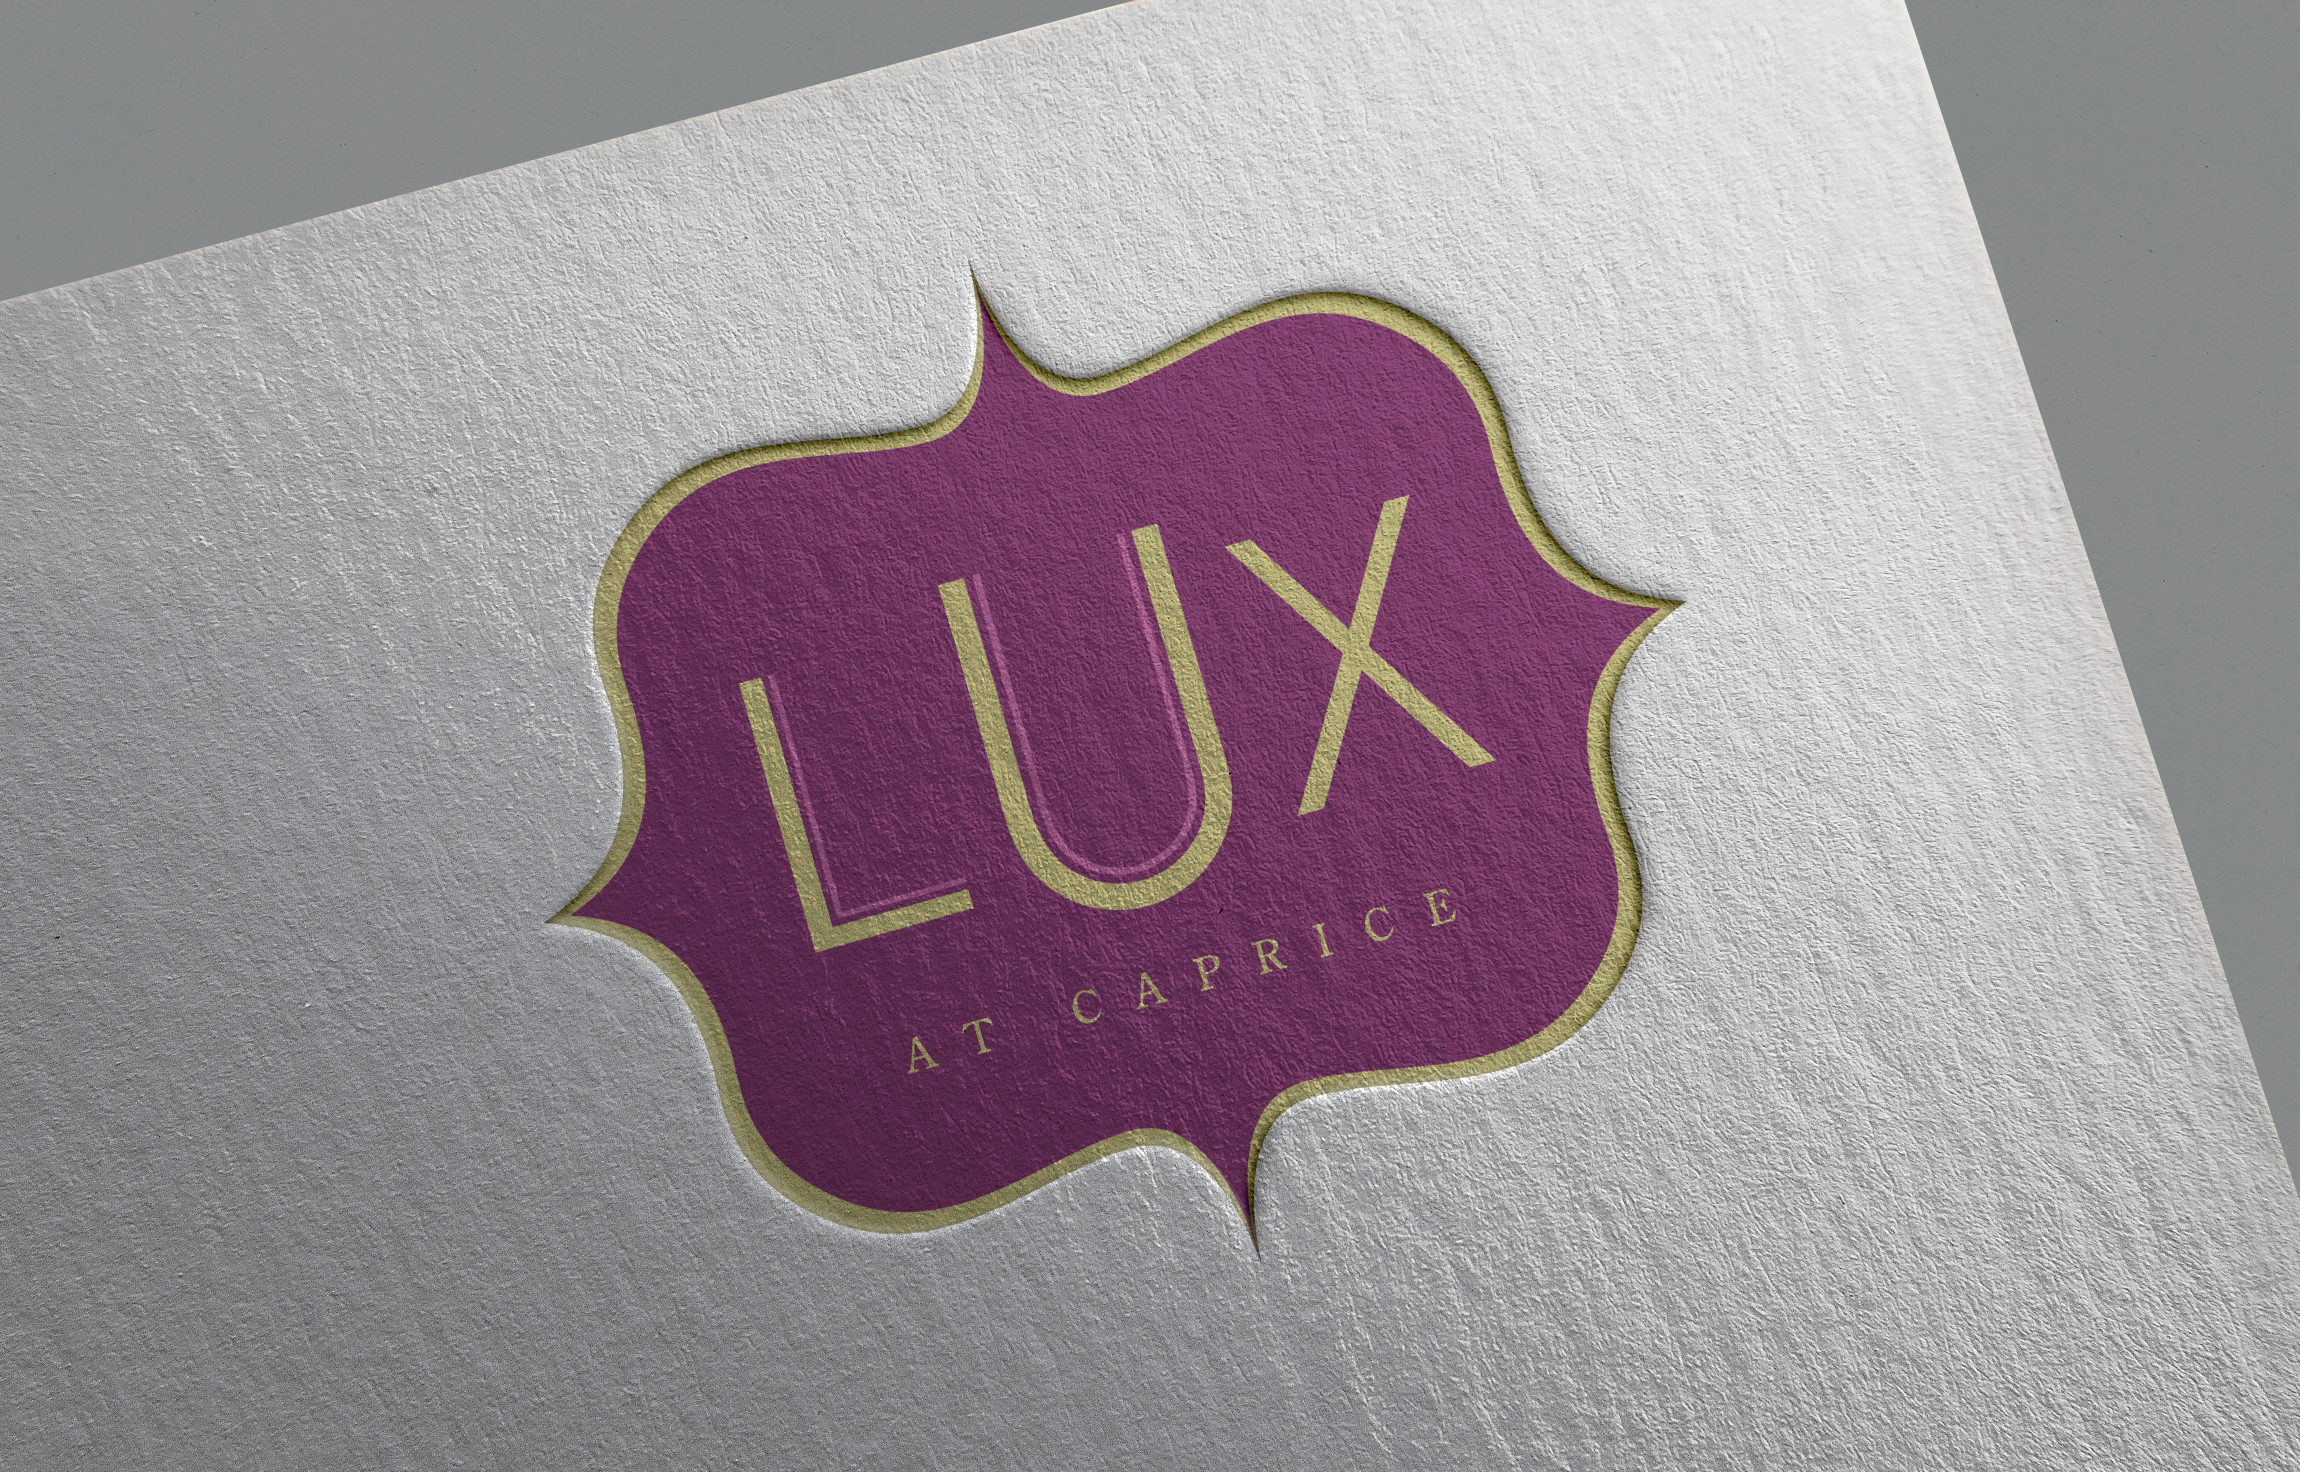 Lux at Caprice - Vancouver Restaurant Branding & Logo Design